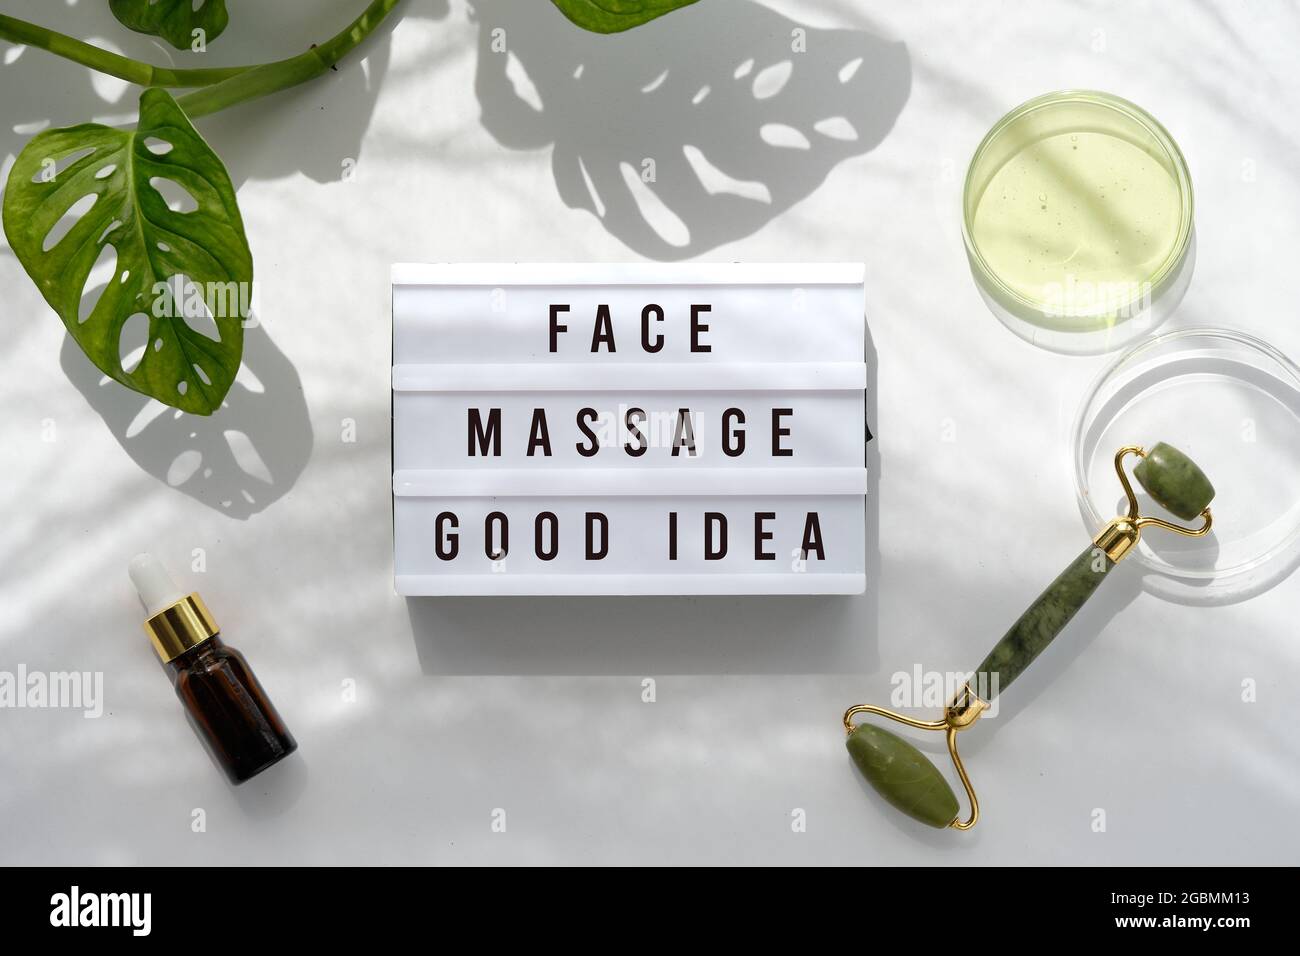 Text Face Massage Good Idea on light box. Lightbox on Moisturizer, green jade face roller with exotic leaves. Monstera Adansonii leaves. Sunshine Stock Photo